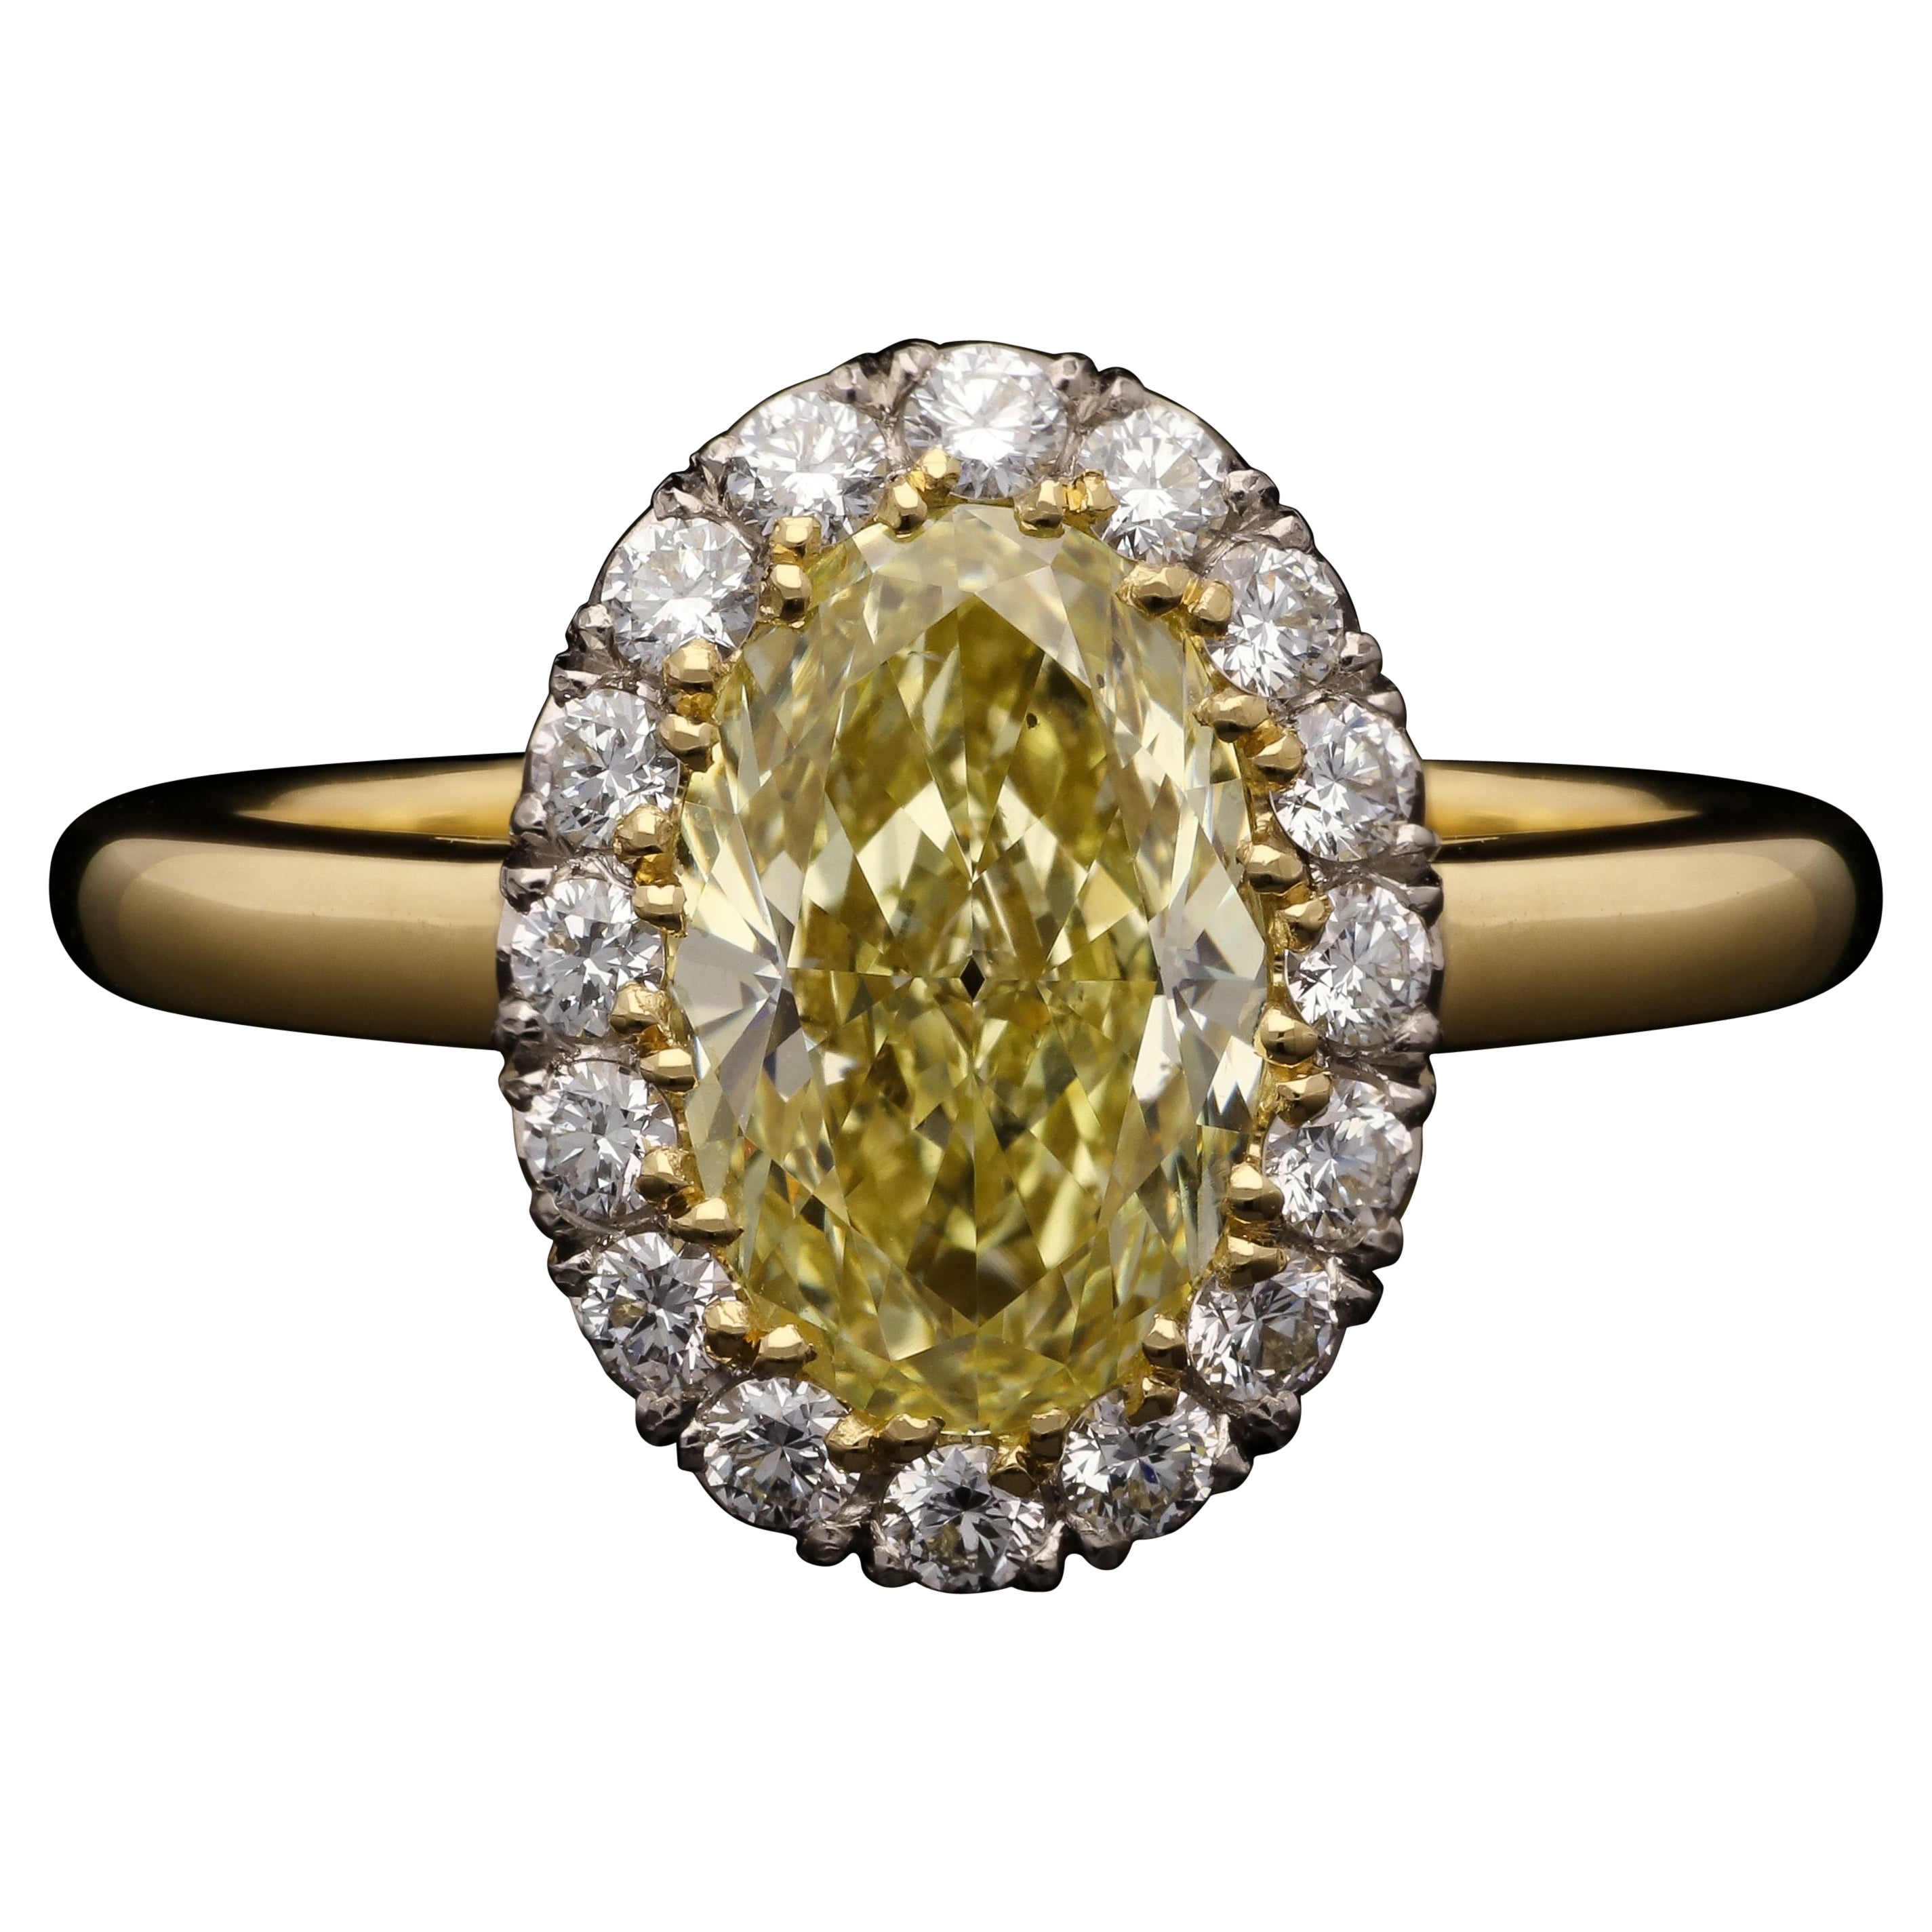 Hancocks 1.54ct Fancy Yellow Oval Diamond Cluster Ring with Diamond Surround